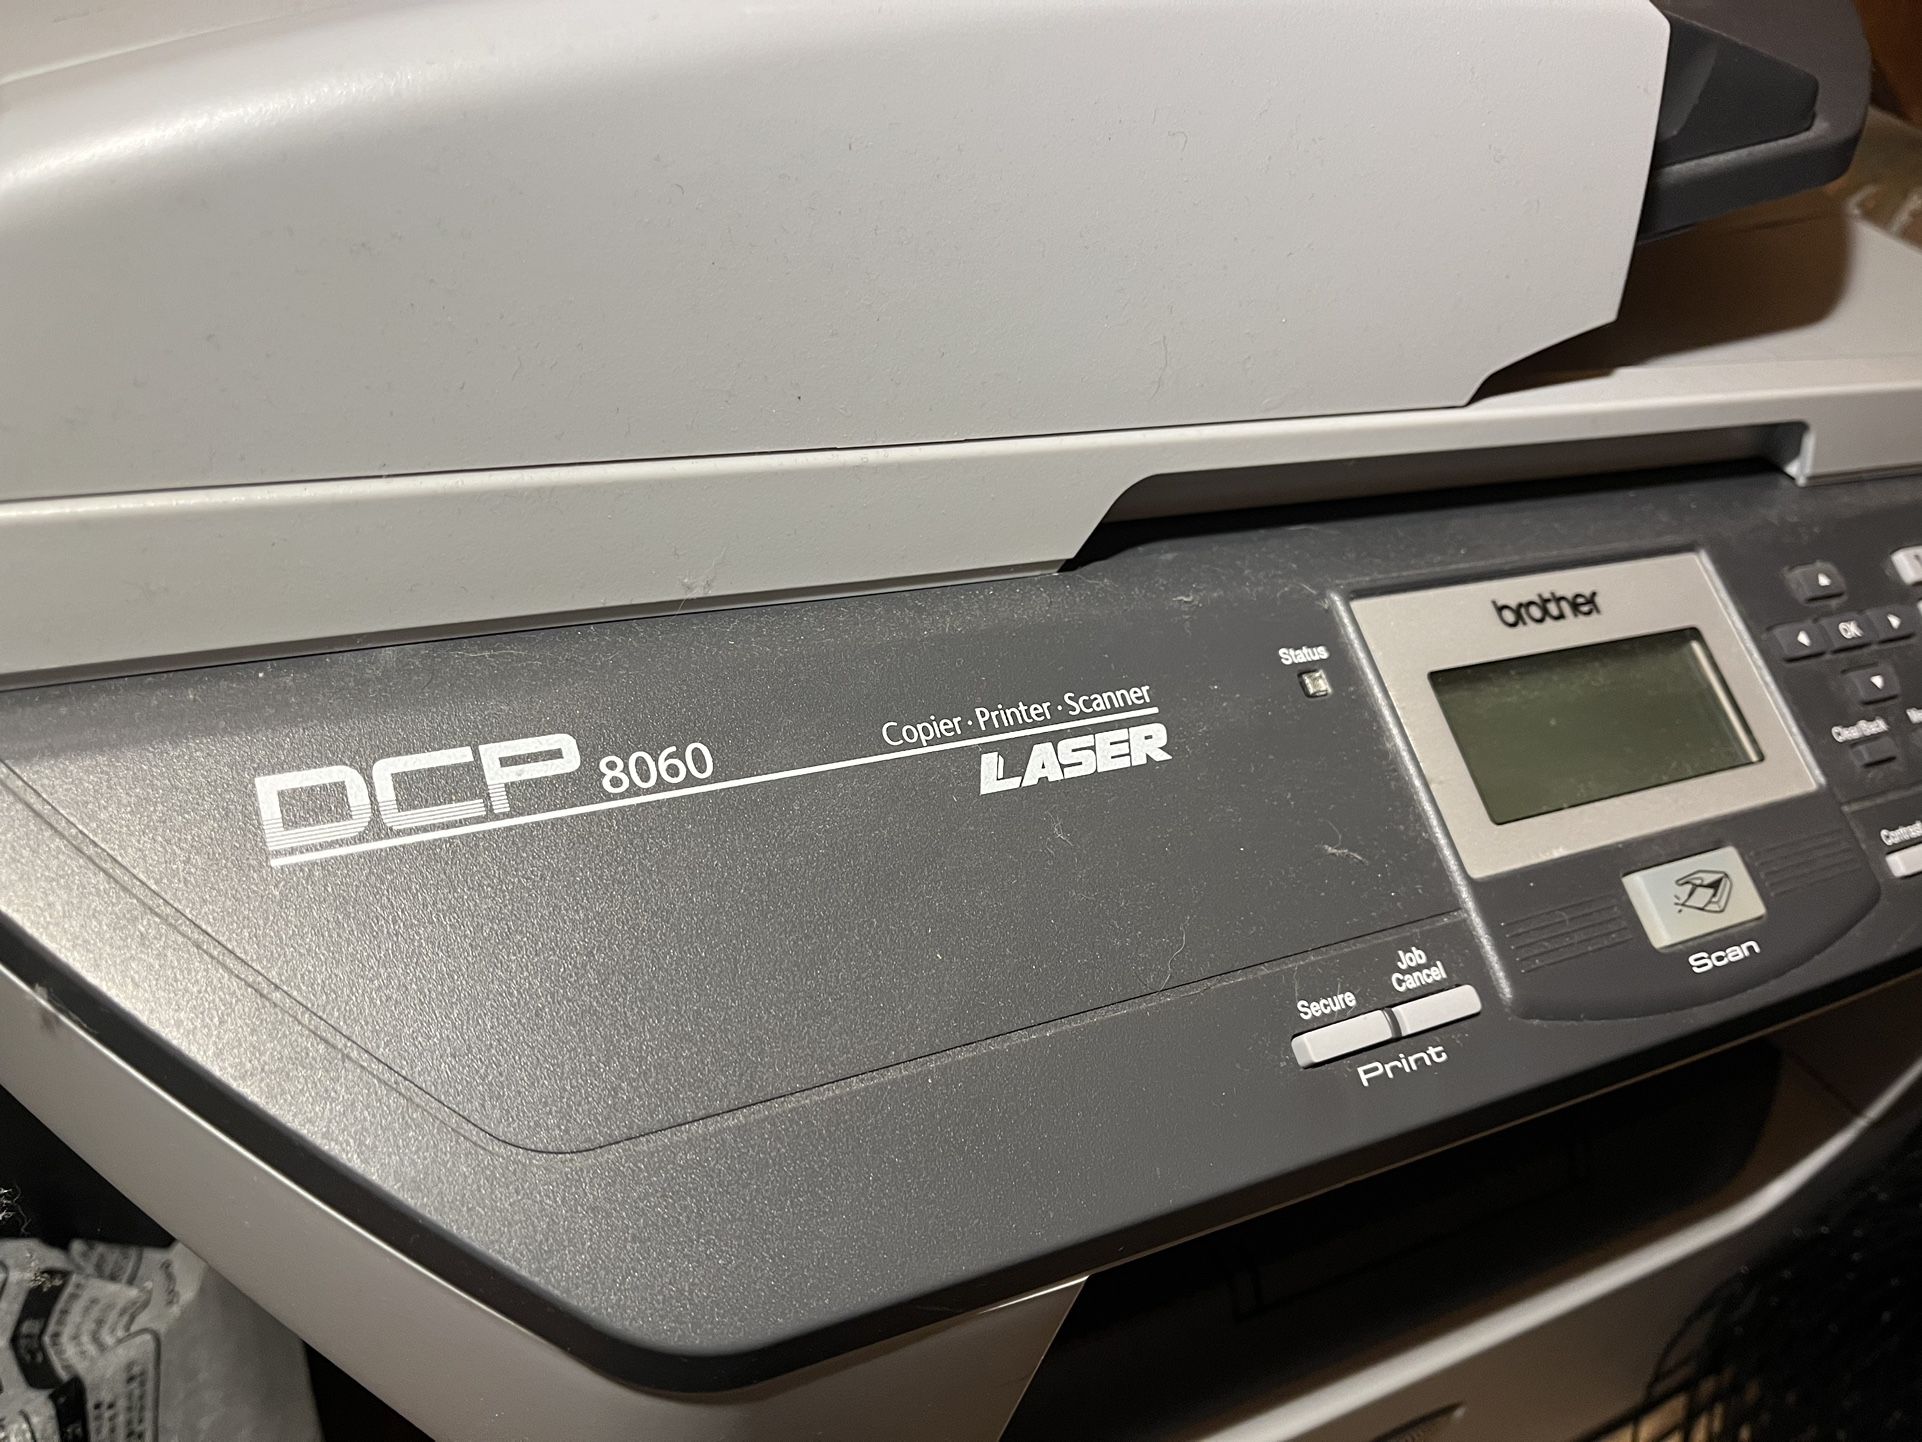 DCP 8060 Copier Printer Scanner 